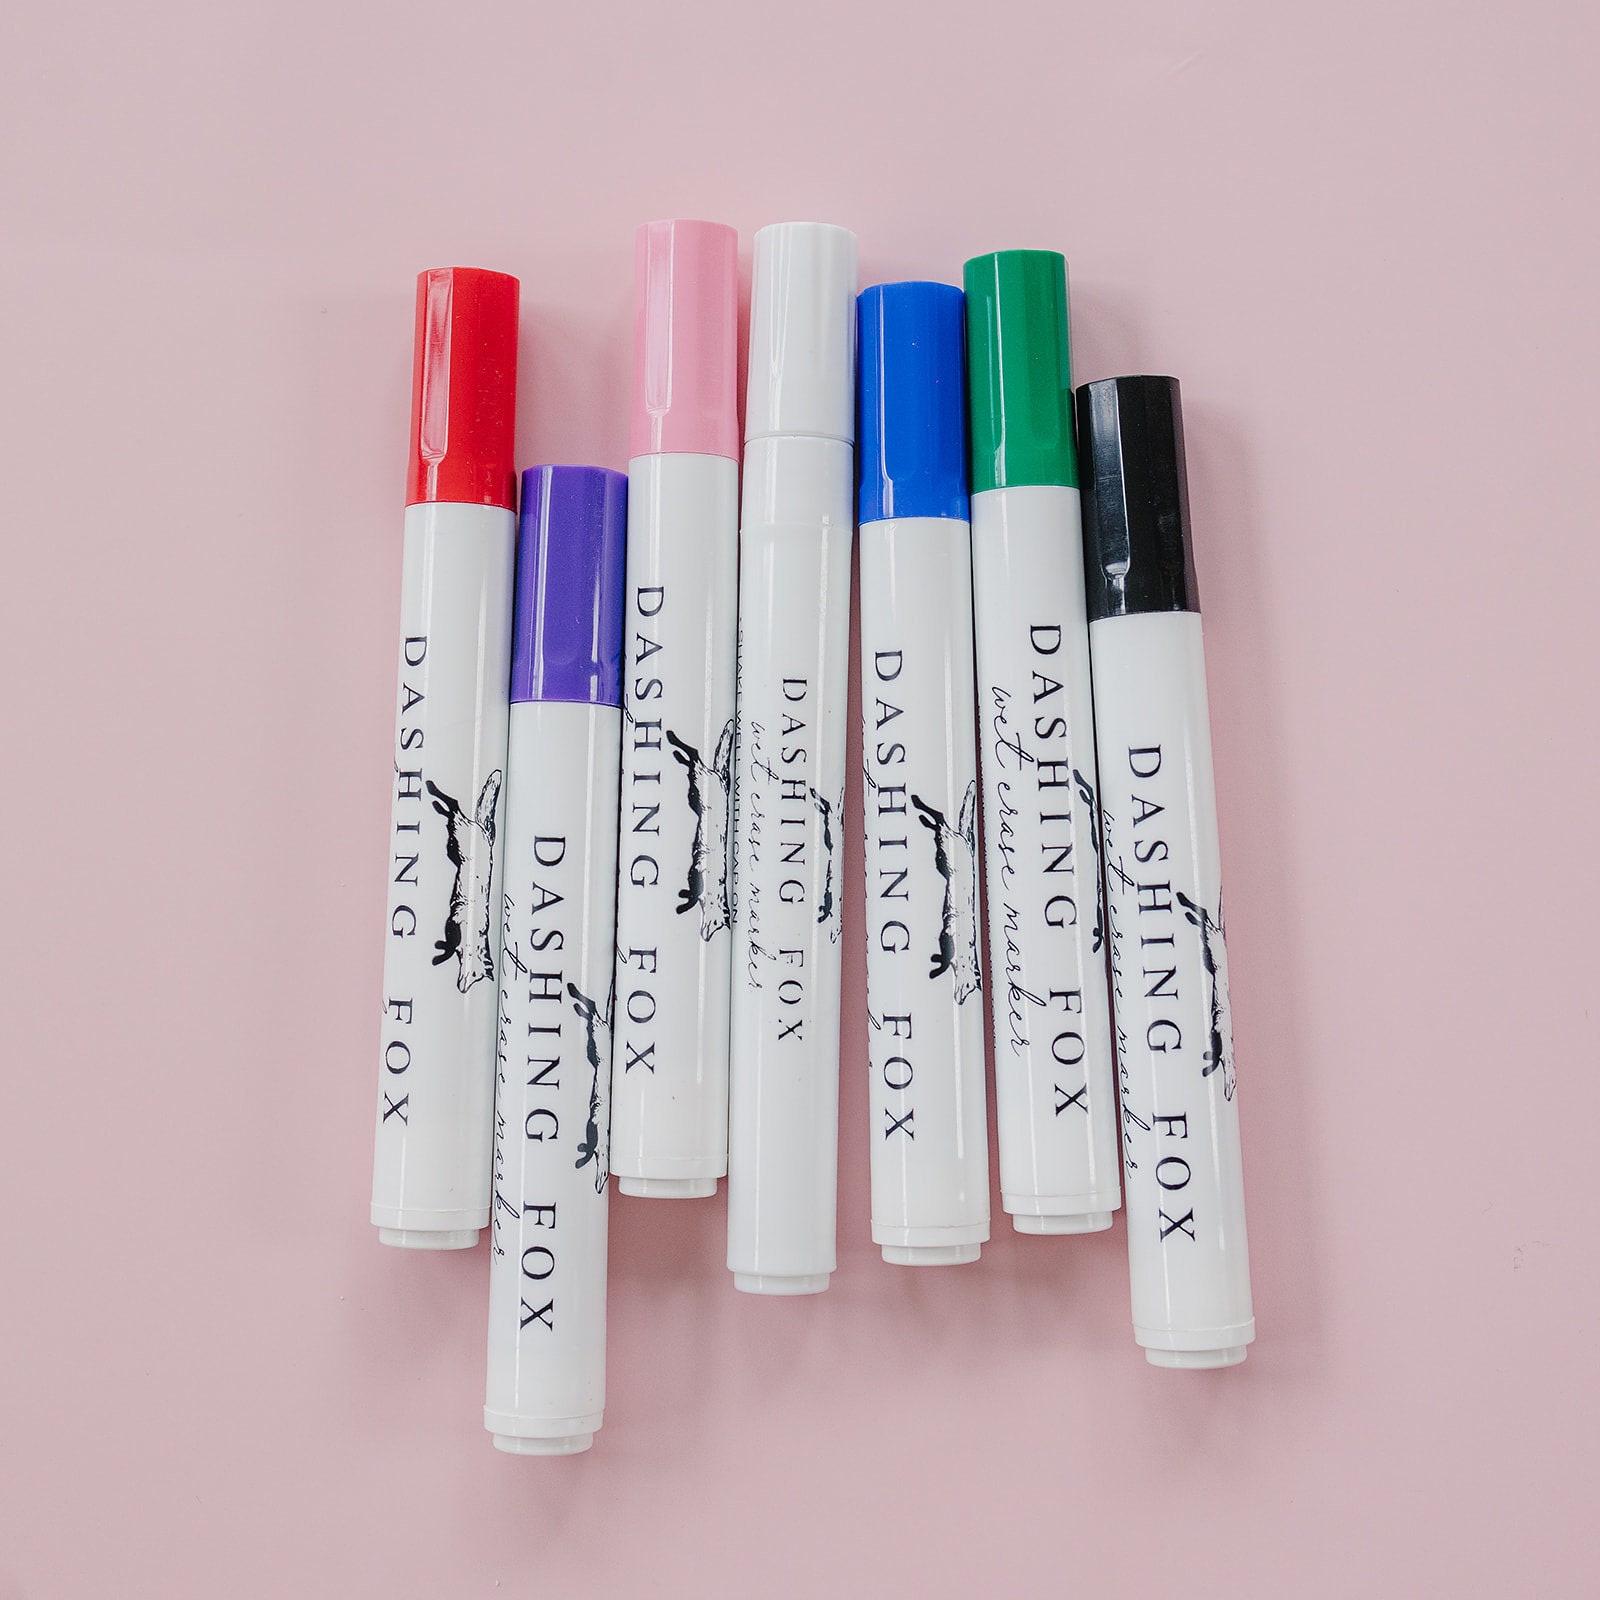 Kassa White Liquid Chalk Markers Wet Erase Chalkboard Pens for